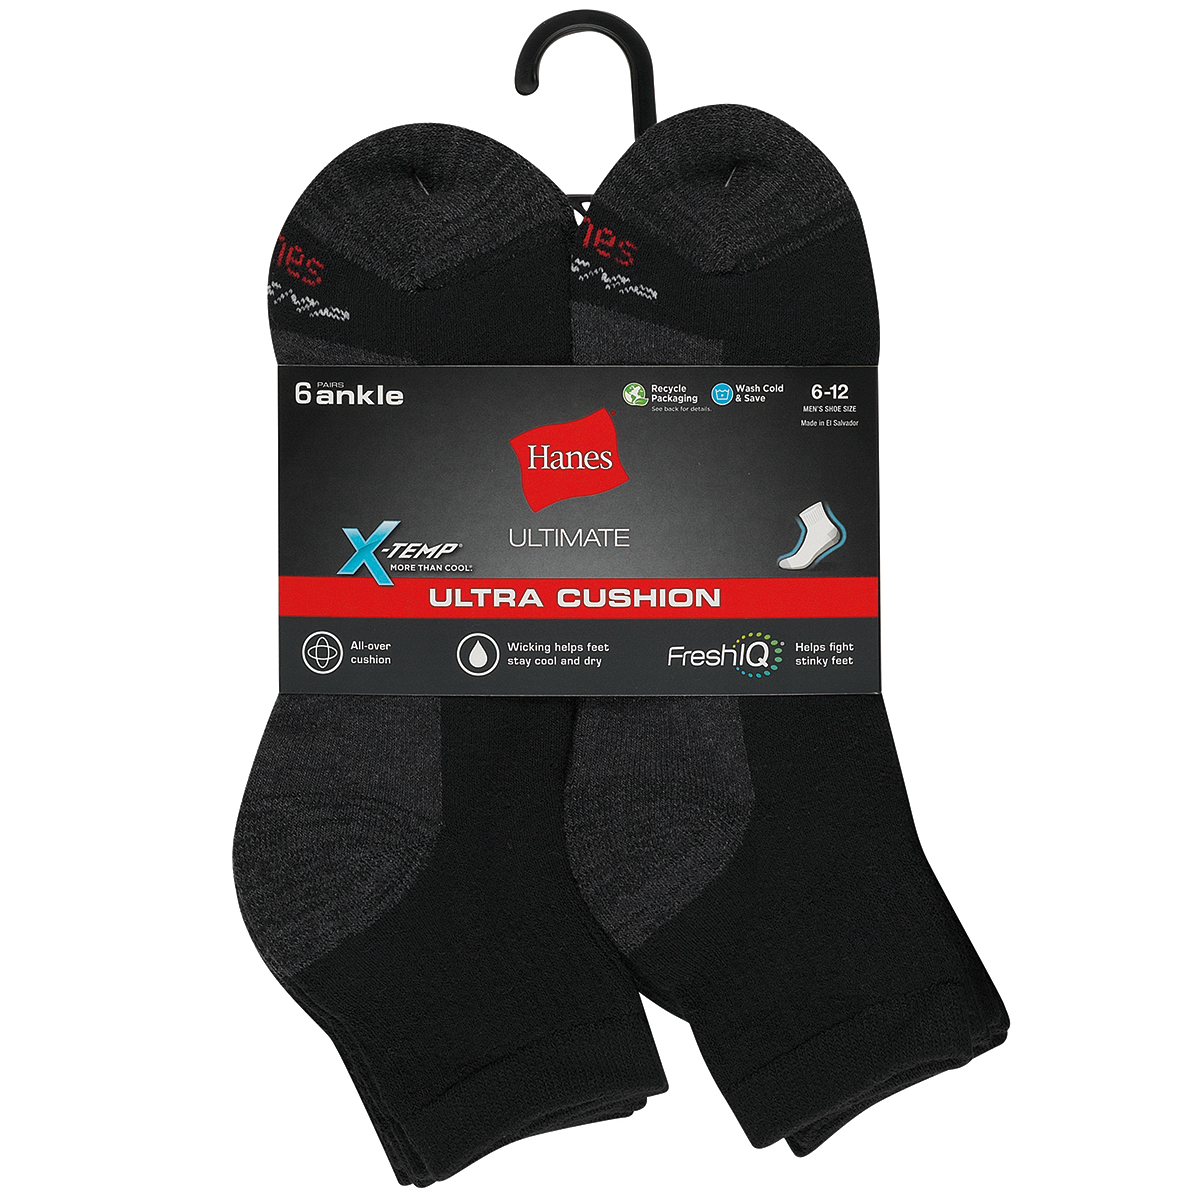 Hanes Men's Ultimate X-Temp Ultra Cushion Ankle Socks, 6 Pack